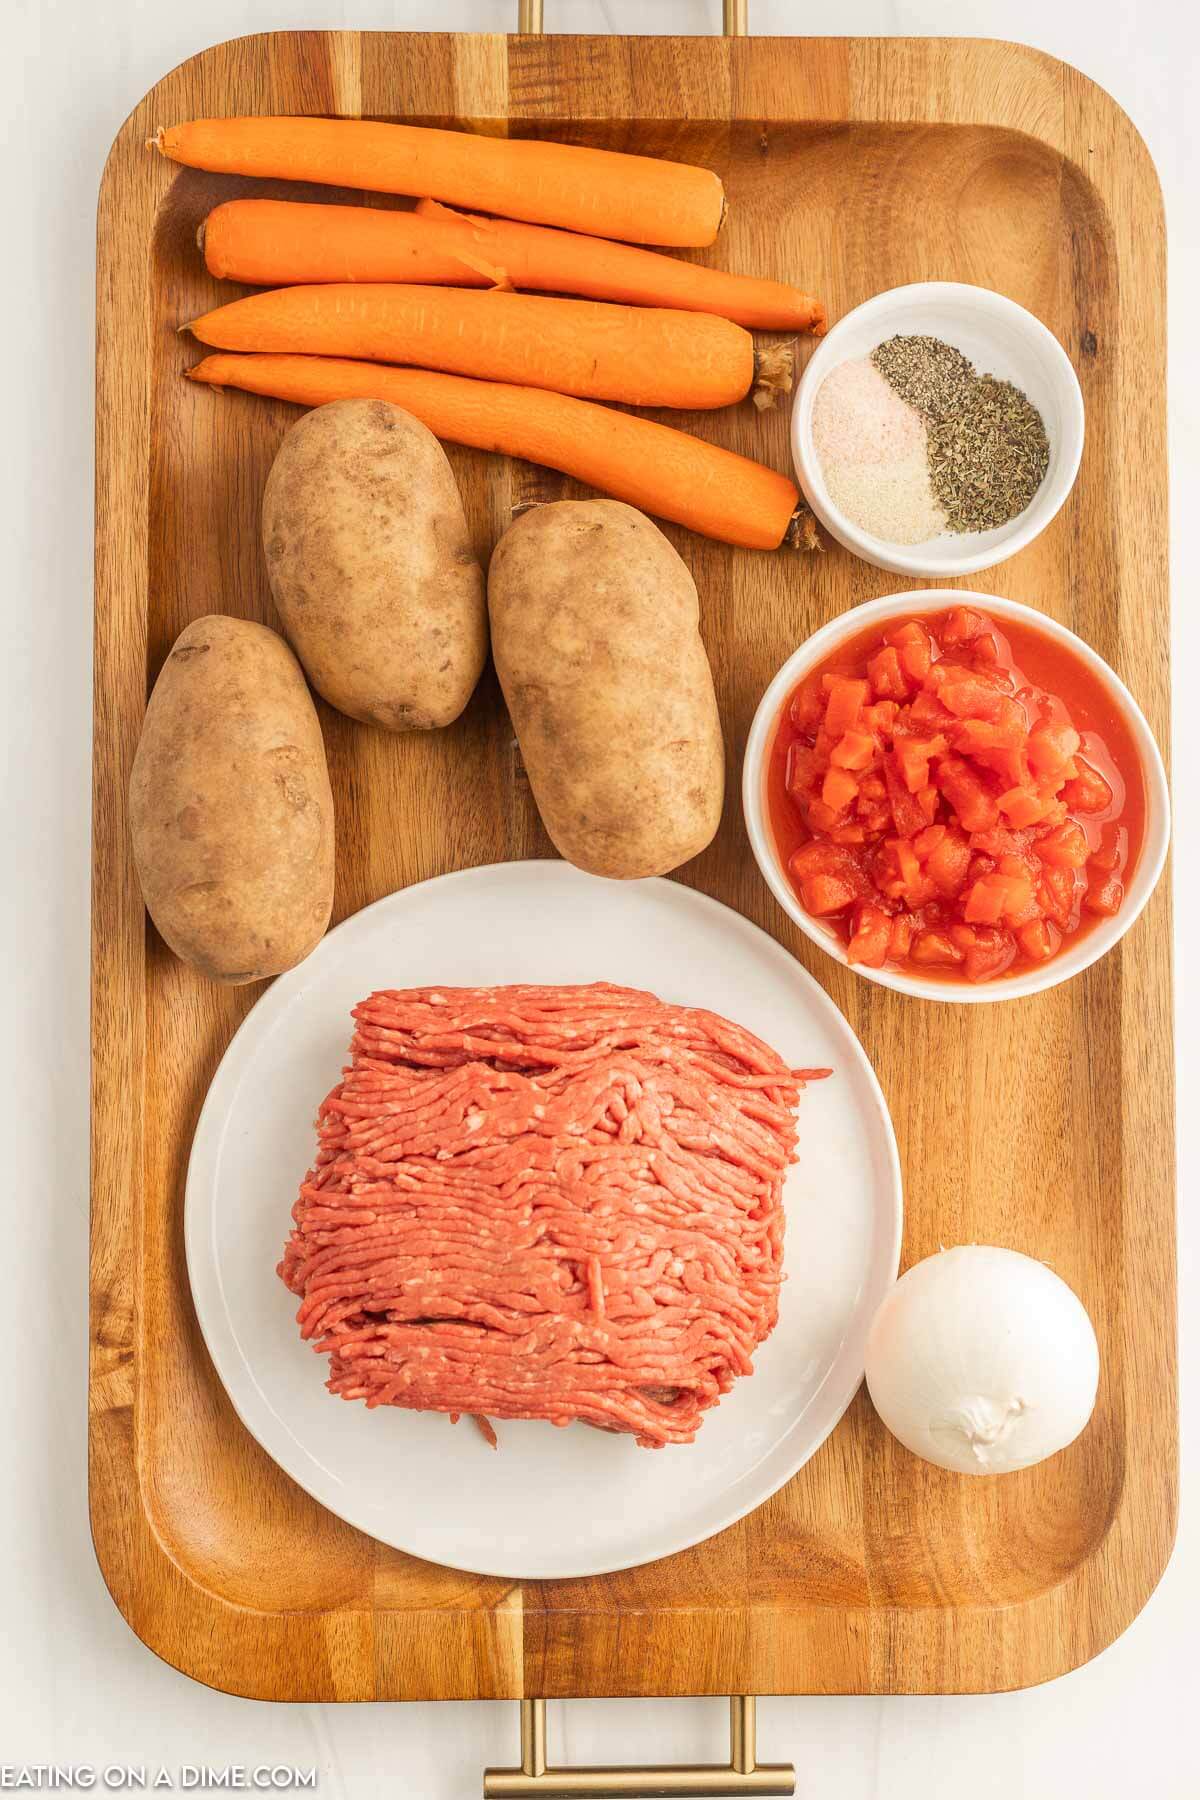 Ingredients needed - ground beef, potatoes, carrots, onion, diced tomatoes, beef broth, salt and pepper, italian seasoning, onion powder, minced garlic